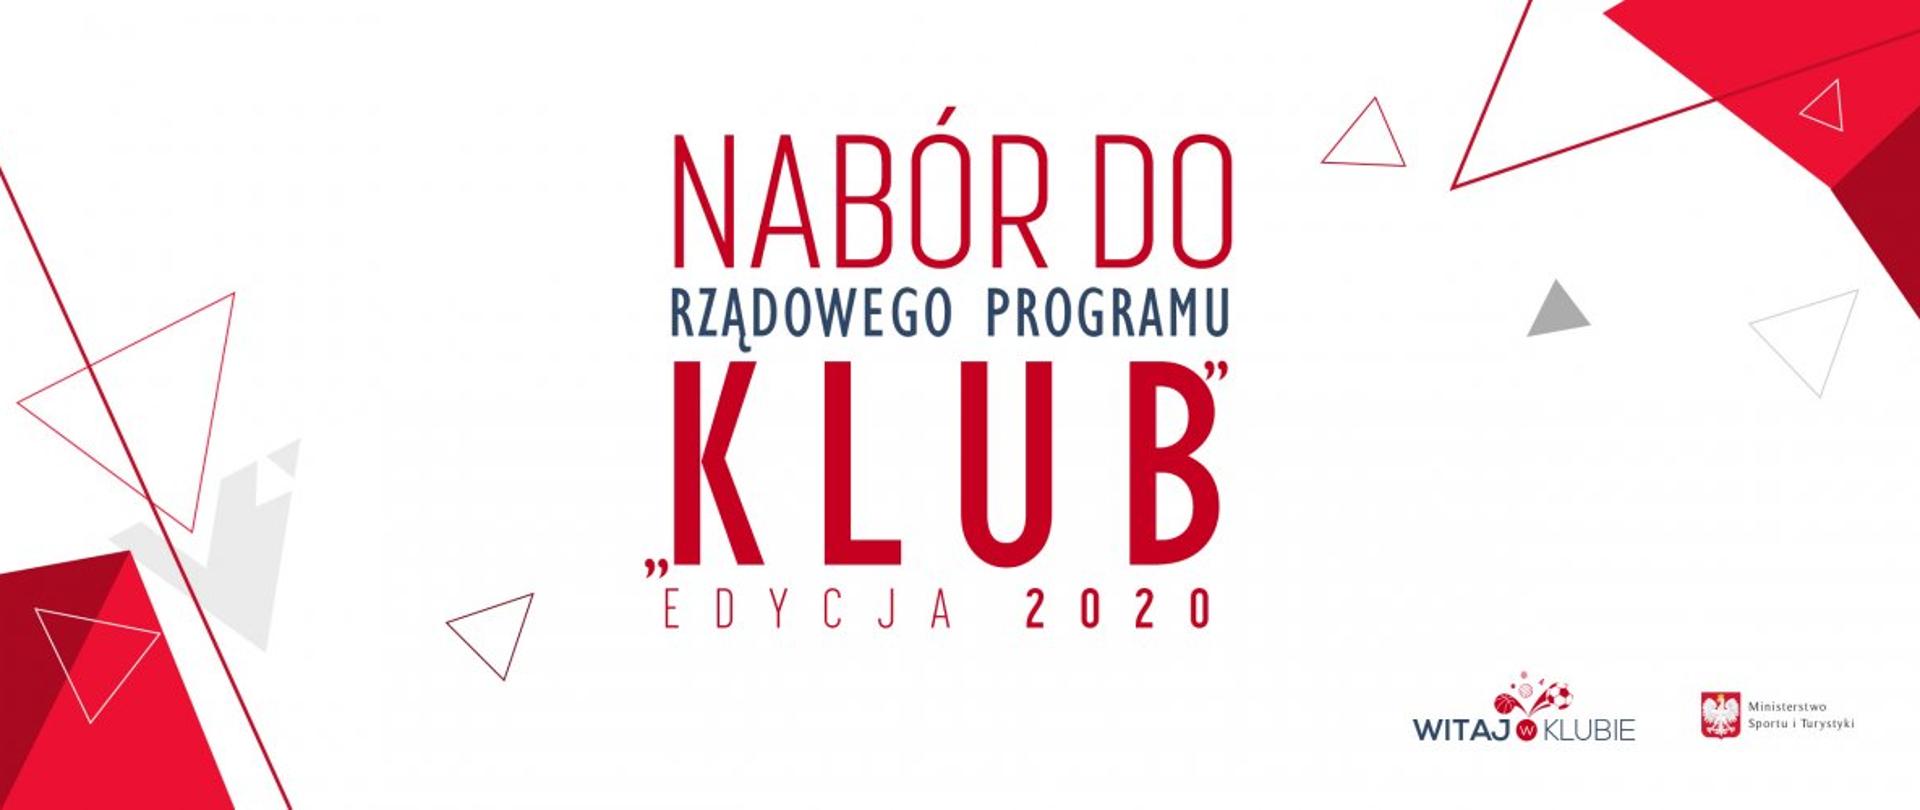 Nabór do Programu Klub 2020